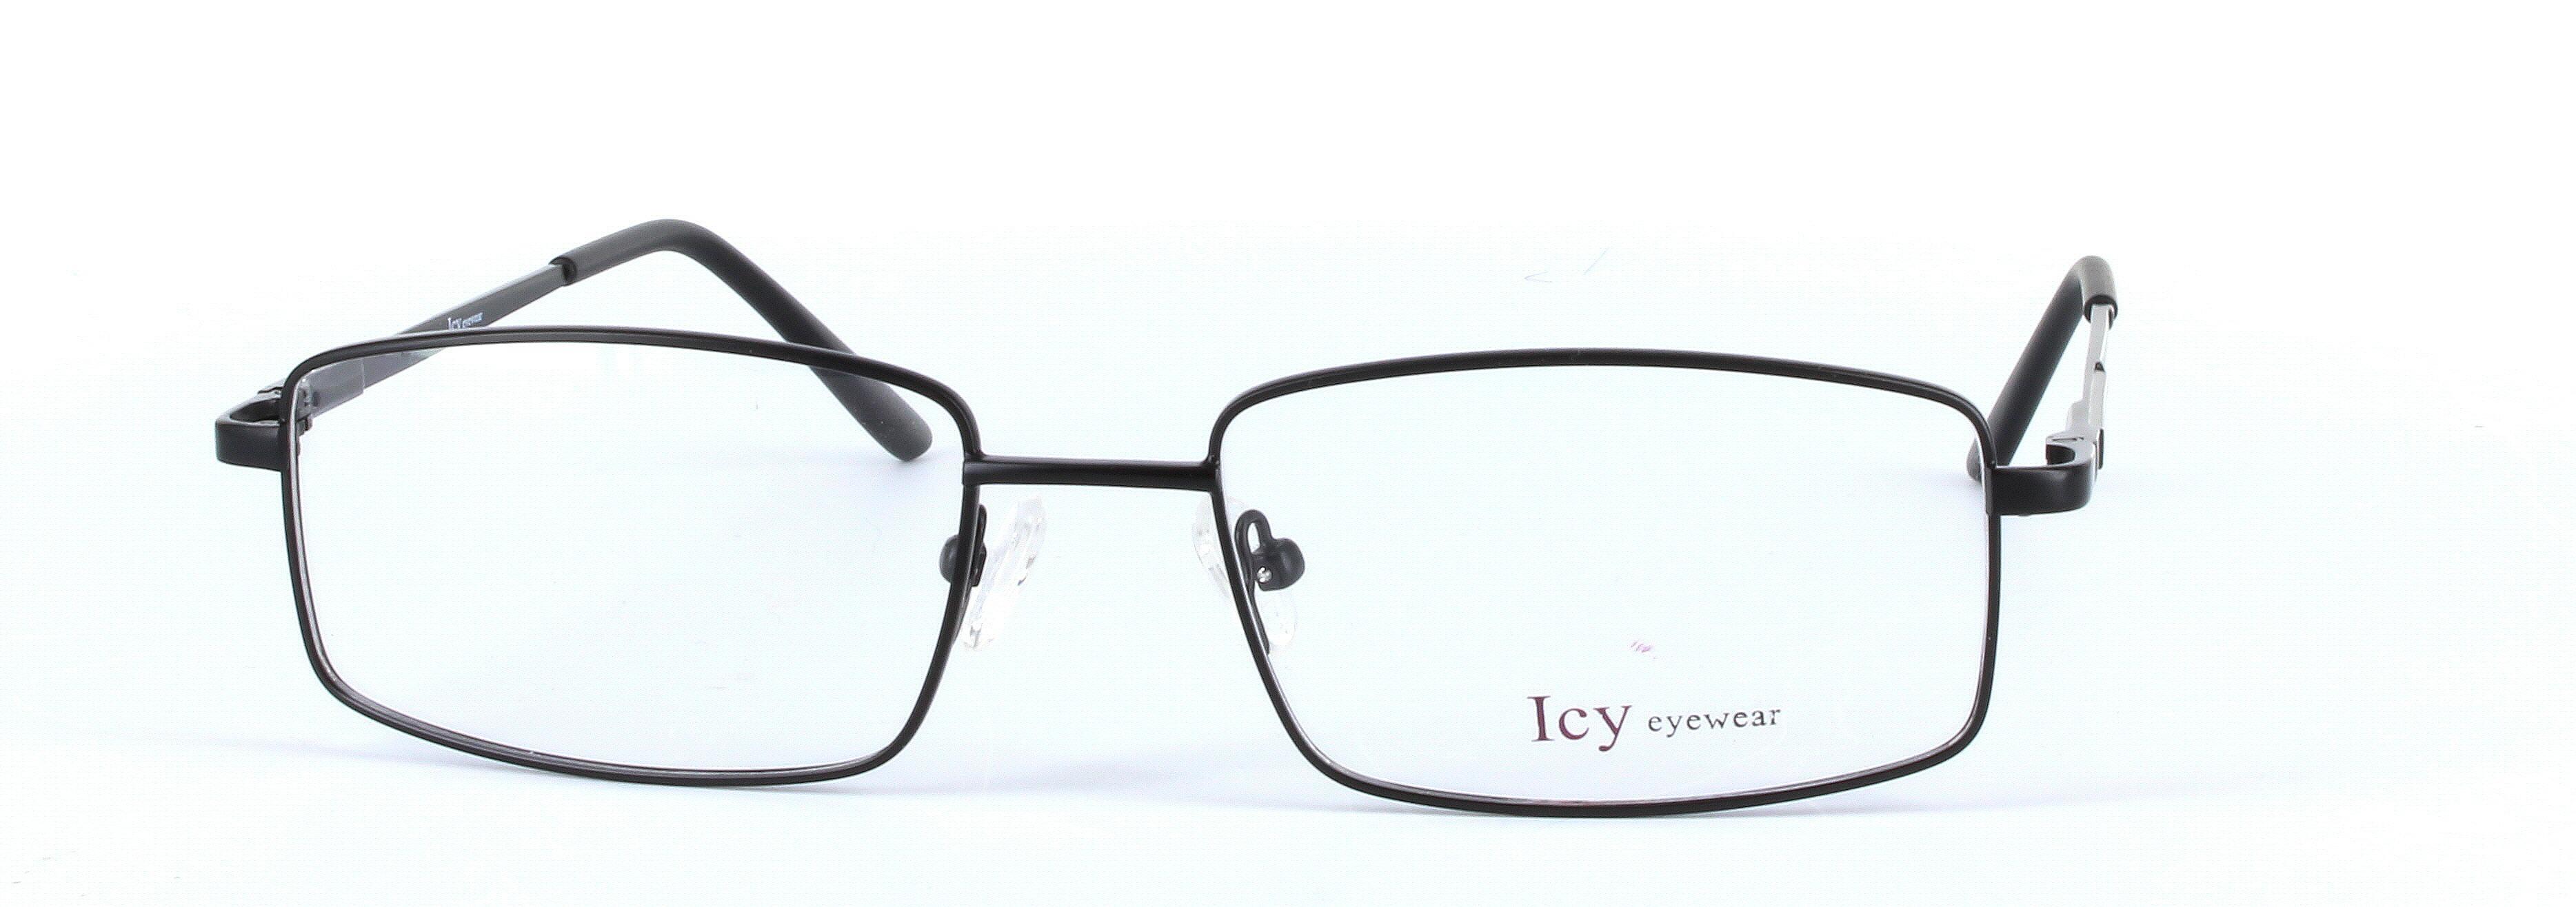 Chester Black Full Rim Rectangular Metal Glasses - Image View 5